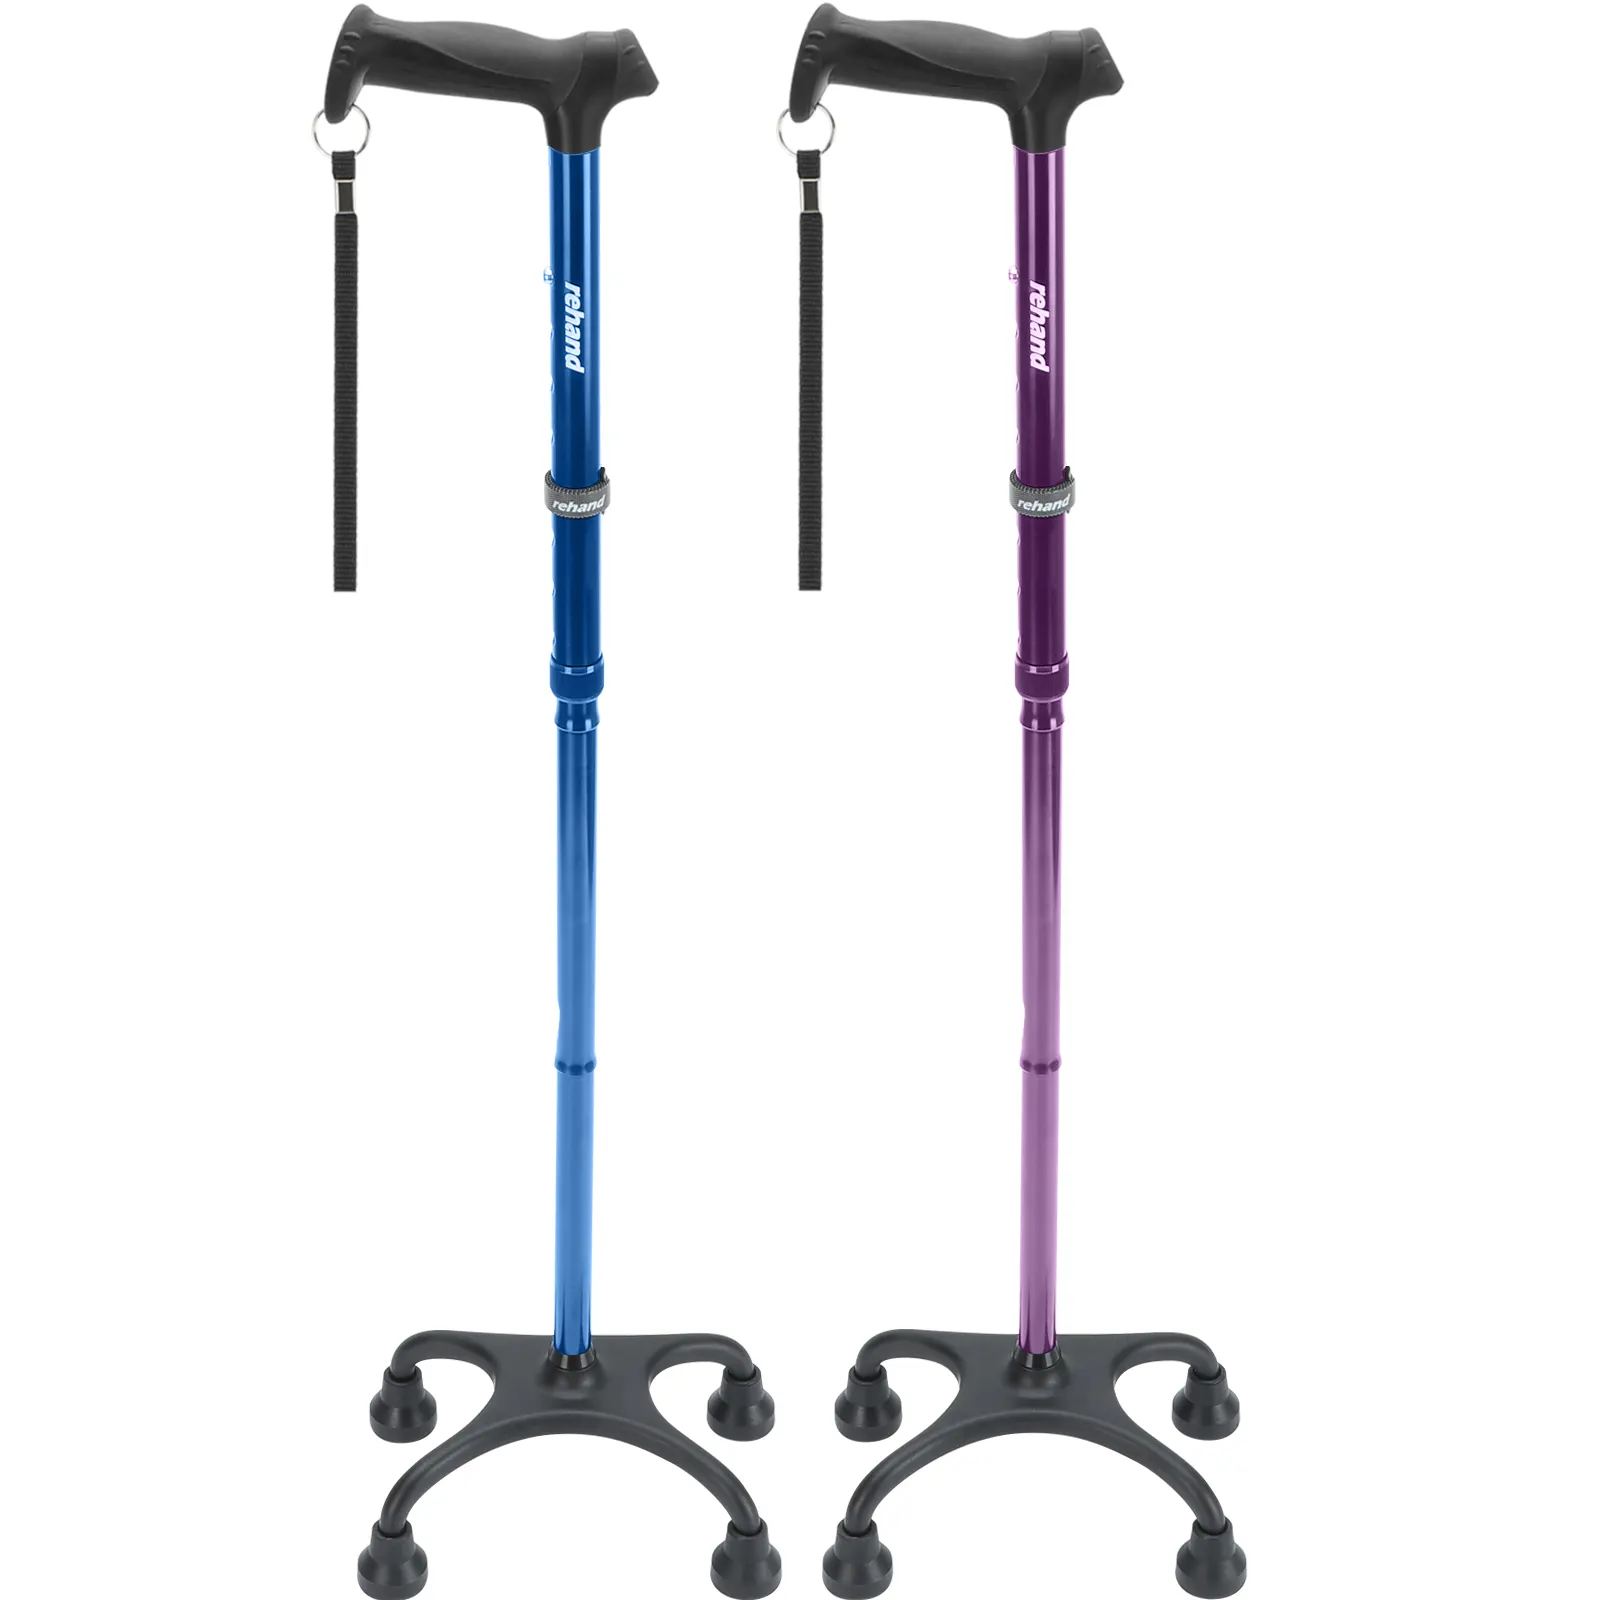 Rehand Quad Cane Folding Adjustable Portable Walking Cane Elderly Handles Four Leg Walking Stick for Men Women